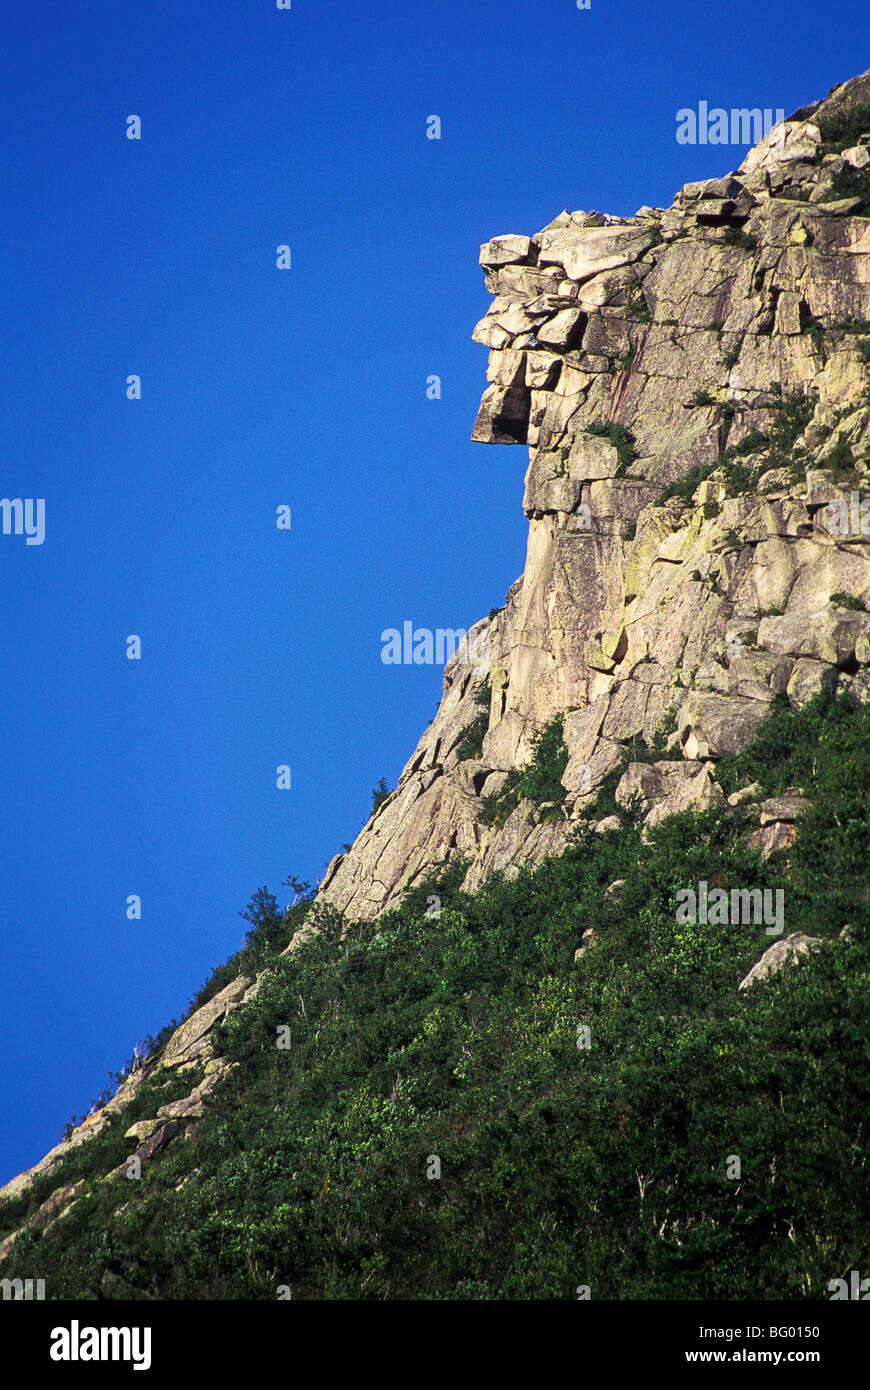 Der alte Mann des Berges, Cannon Mountain in White Mountains in New Hampshire, USA (es stürzte am 3. Mai 2003) Stockfoto